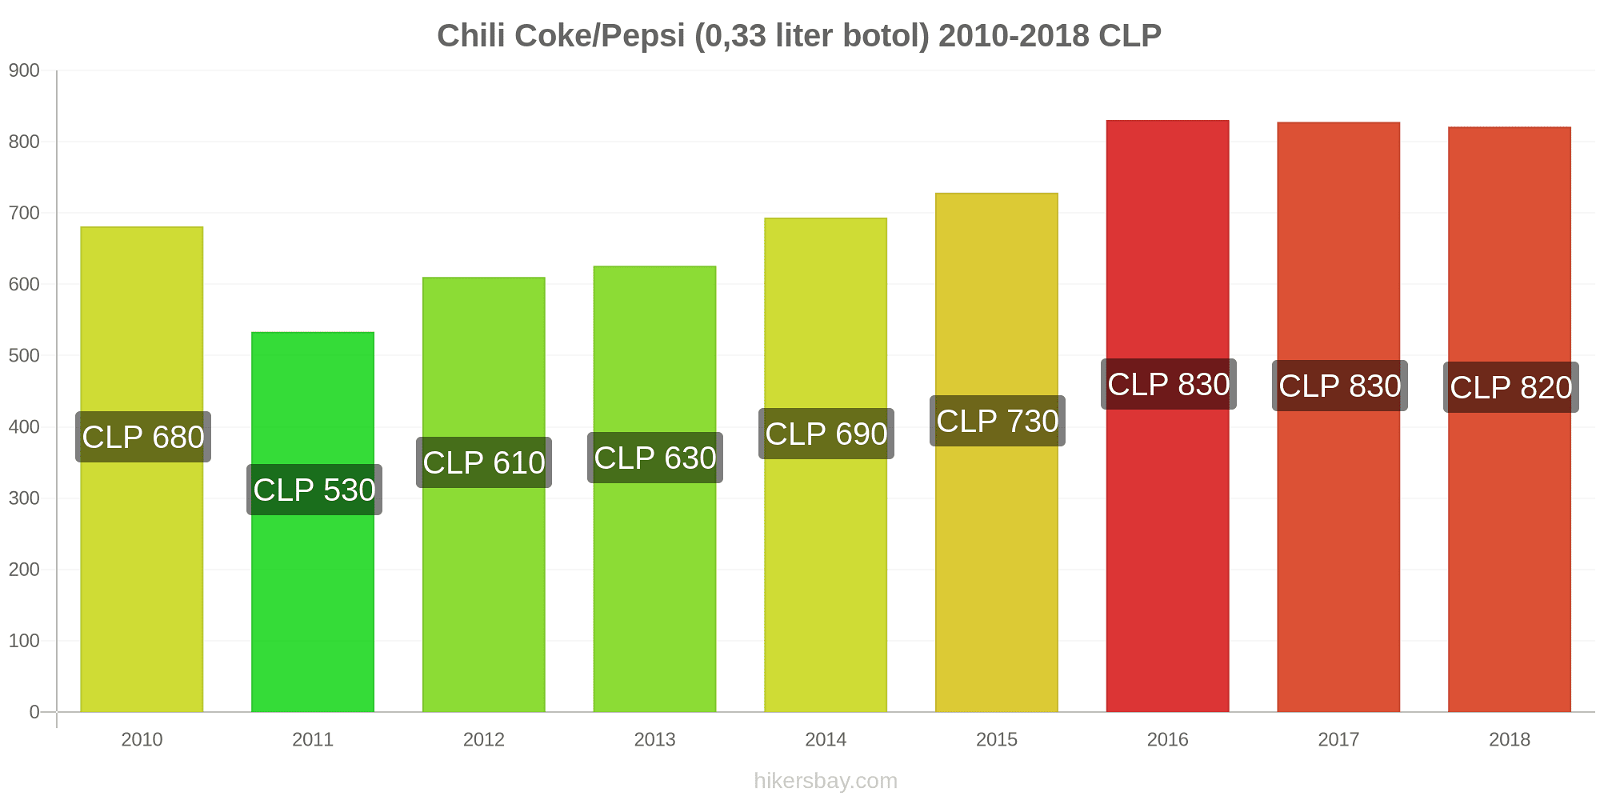 Chili perubahan harga Coca-Cola/Pepsi (botol 0.33 liter) hikersbay.com